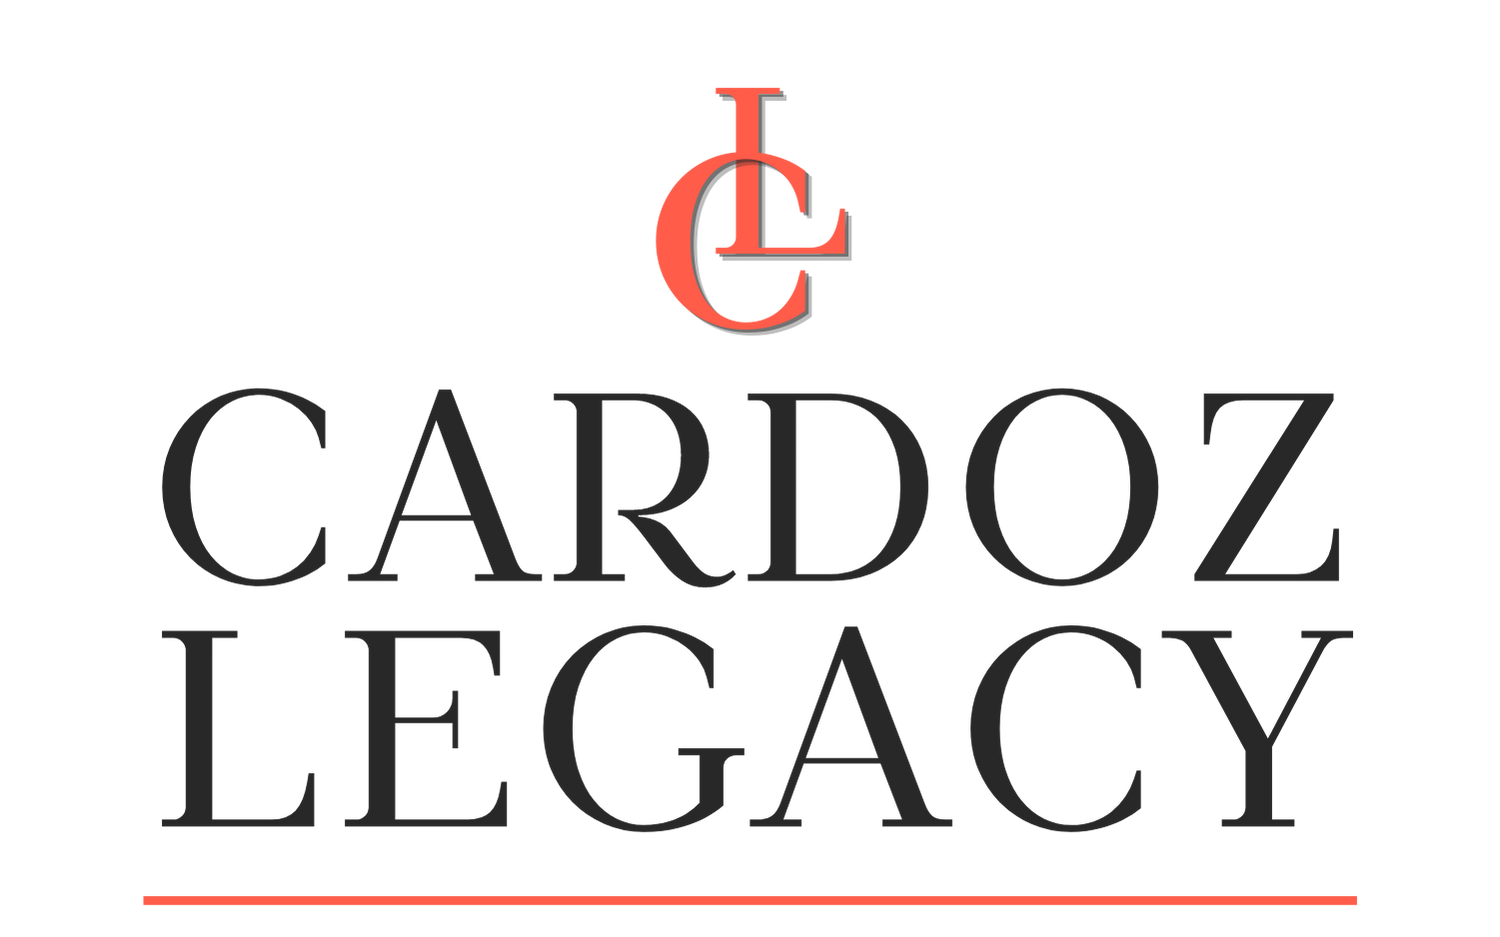 Cardoz Legacy